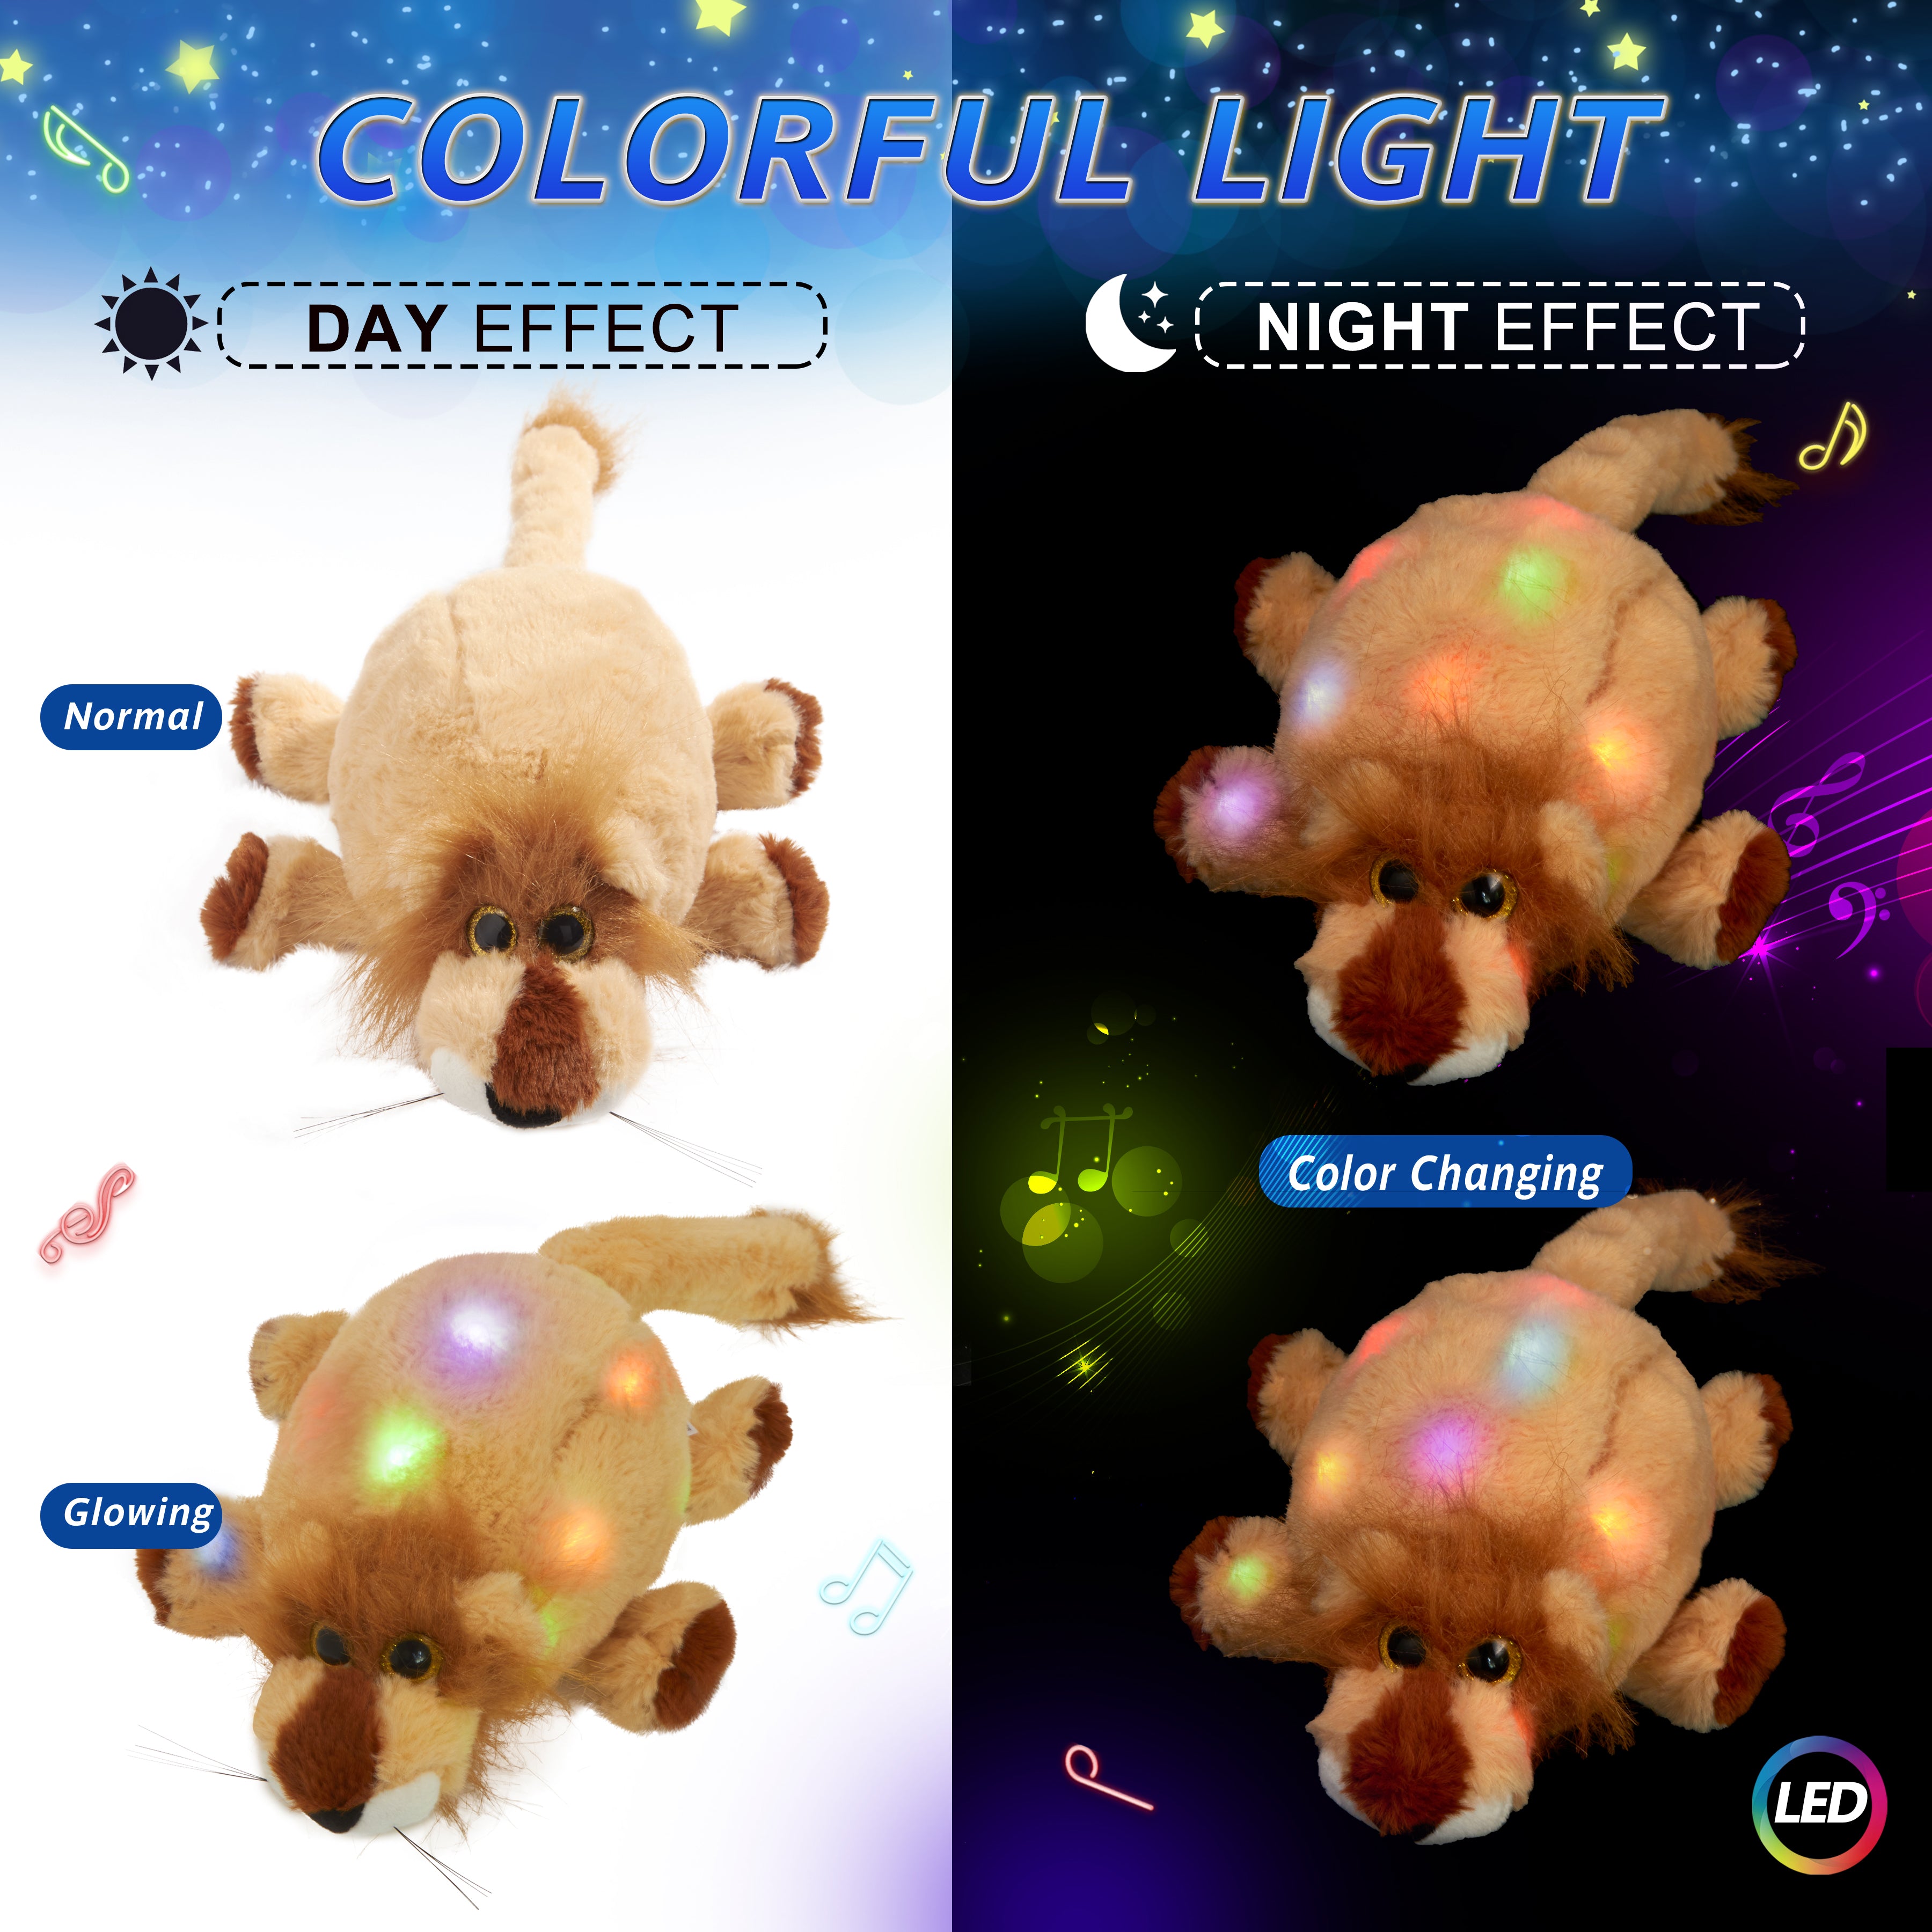 Bstaofy 12’’ Musical Light up Round Stuffed Lion LED Soft Plush - Glow Guards